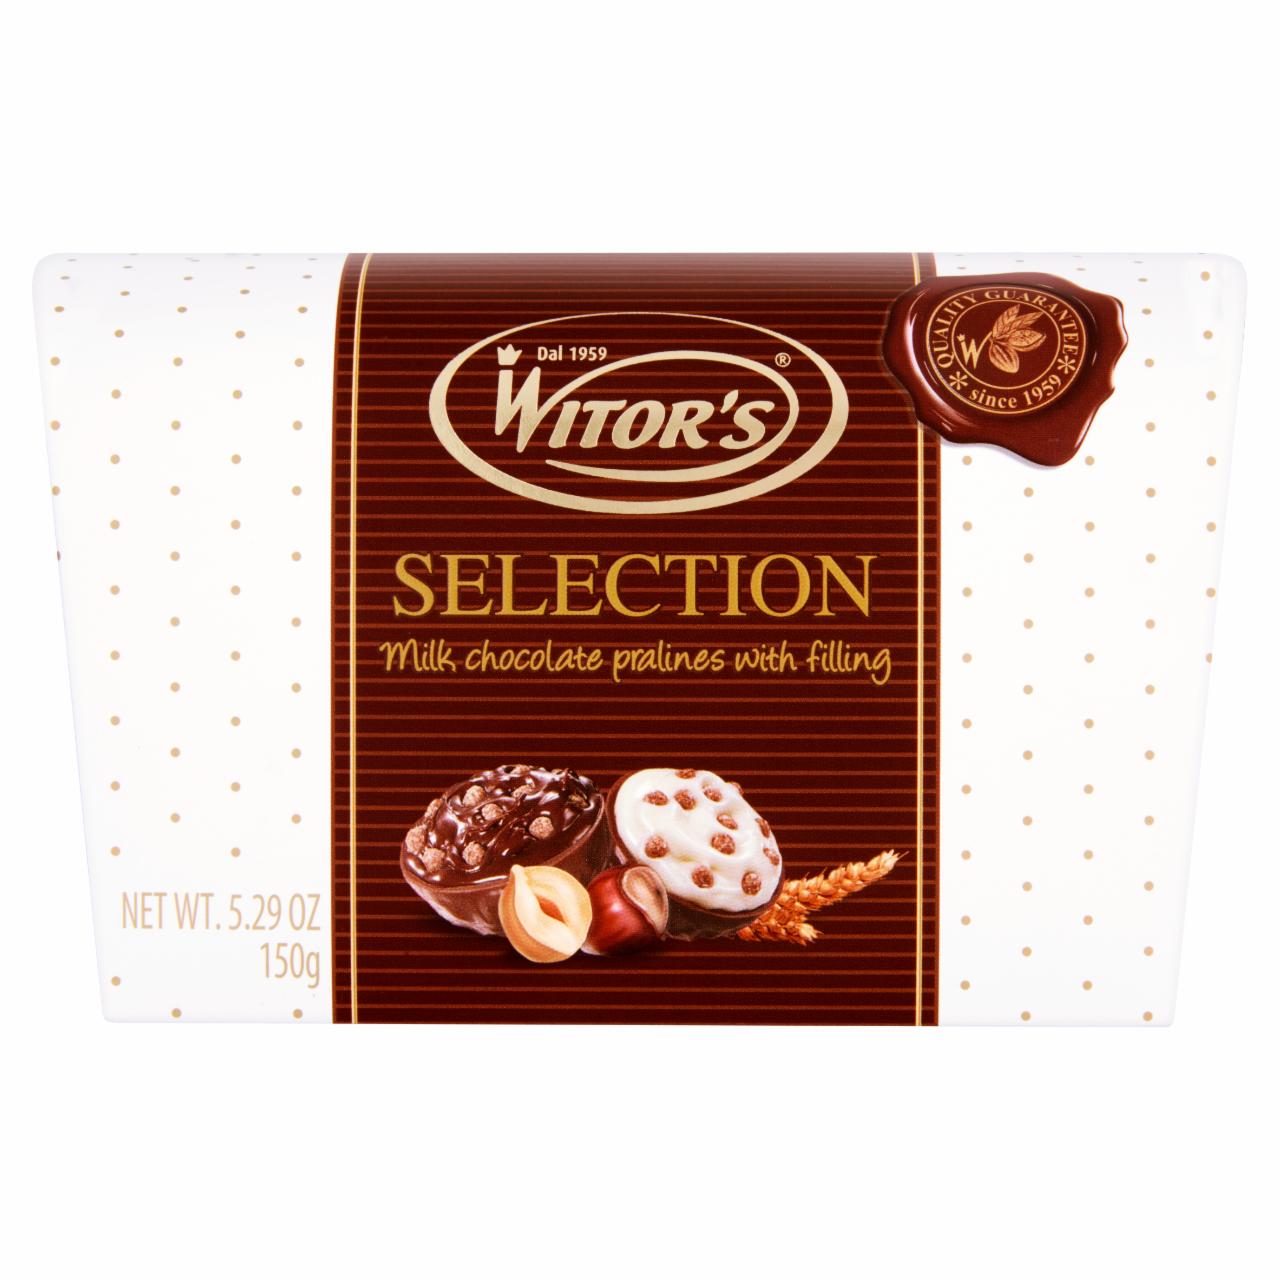 Képek - Witor's Selection vegyes tejcsokoládé praliné tejes krémtöltelékkel, mogyorós töltelékkel 150 g